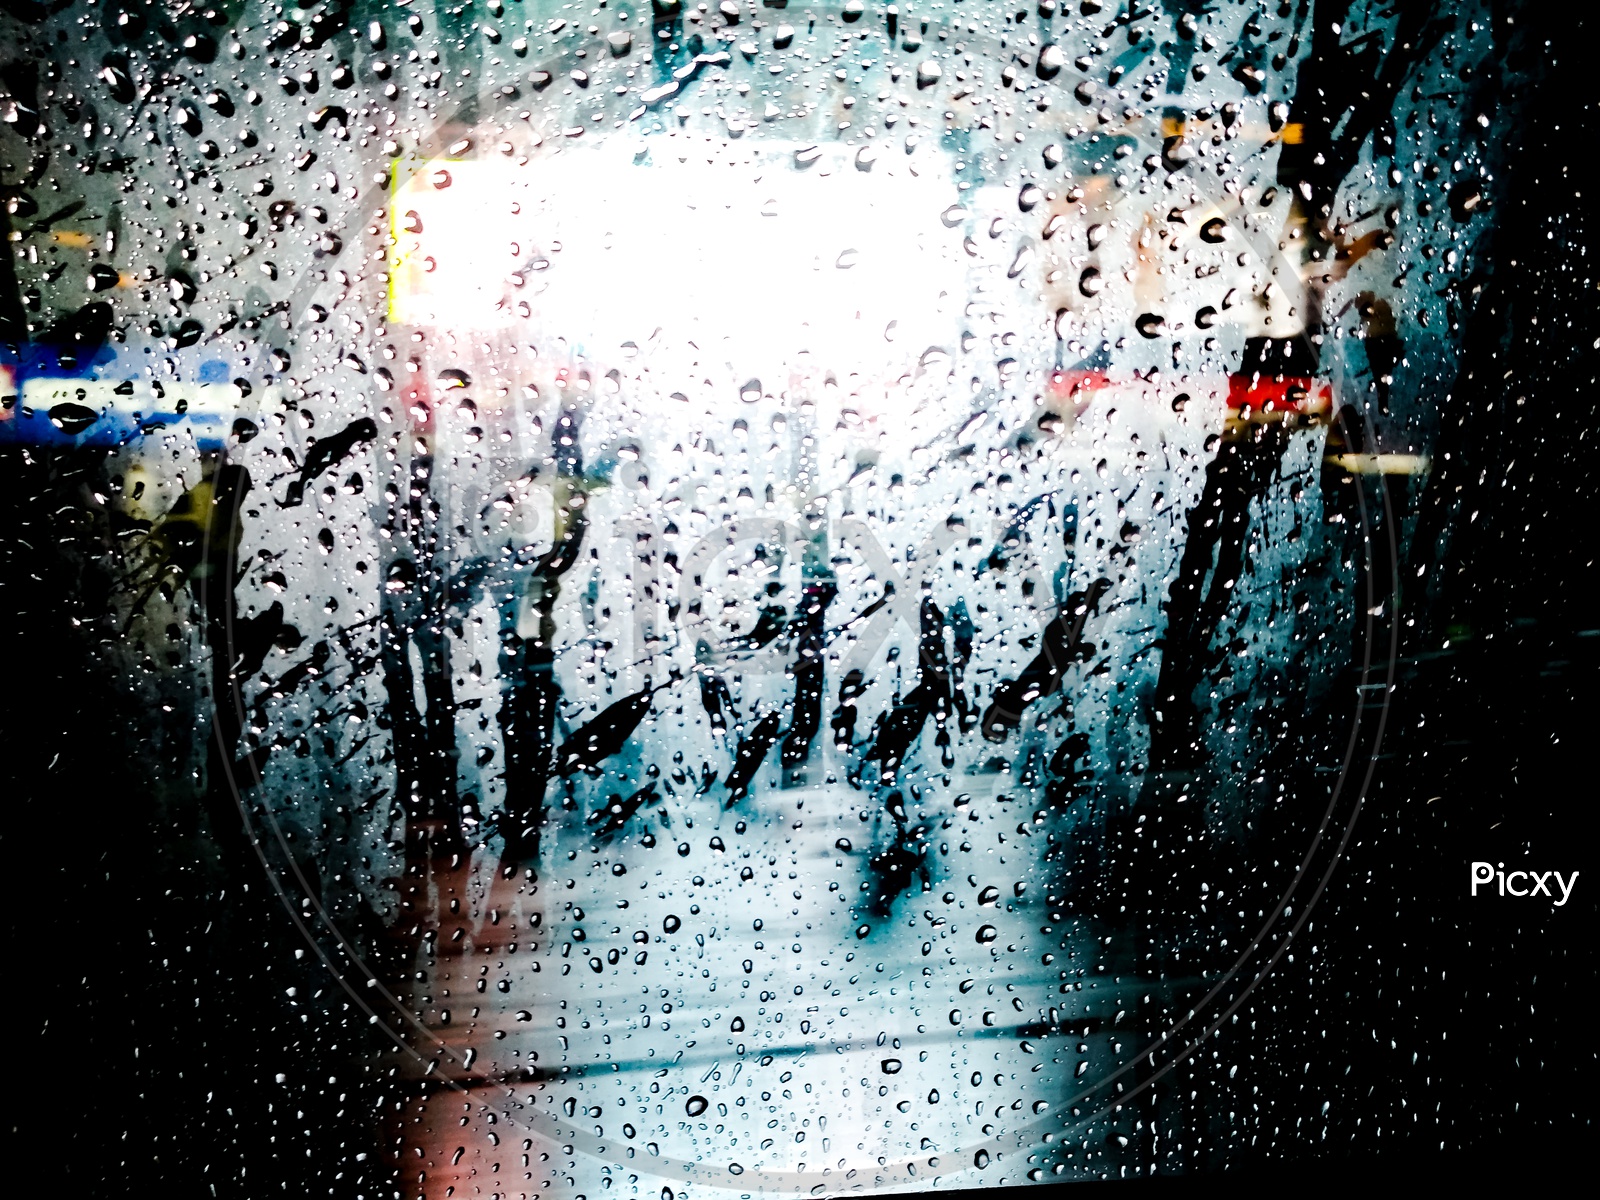 A scary rainy day. rain drops on glass